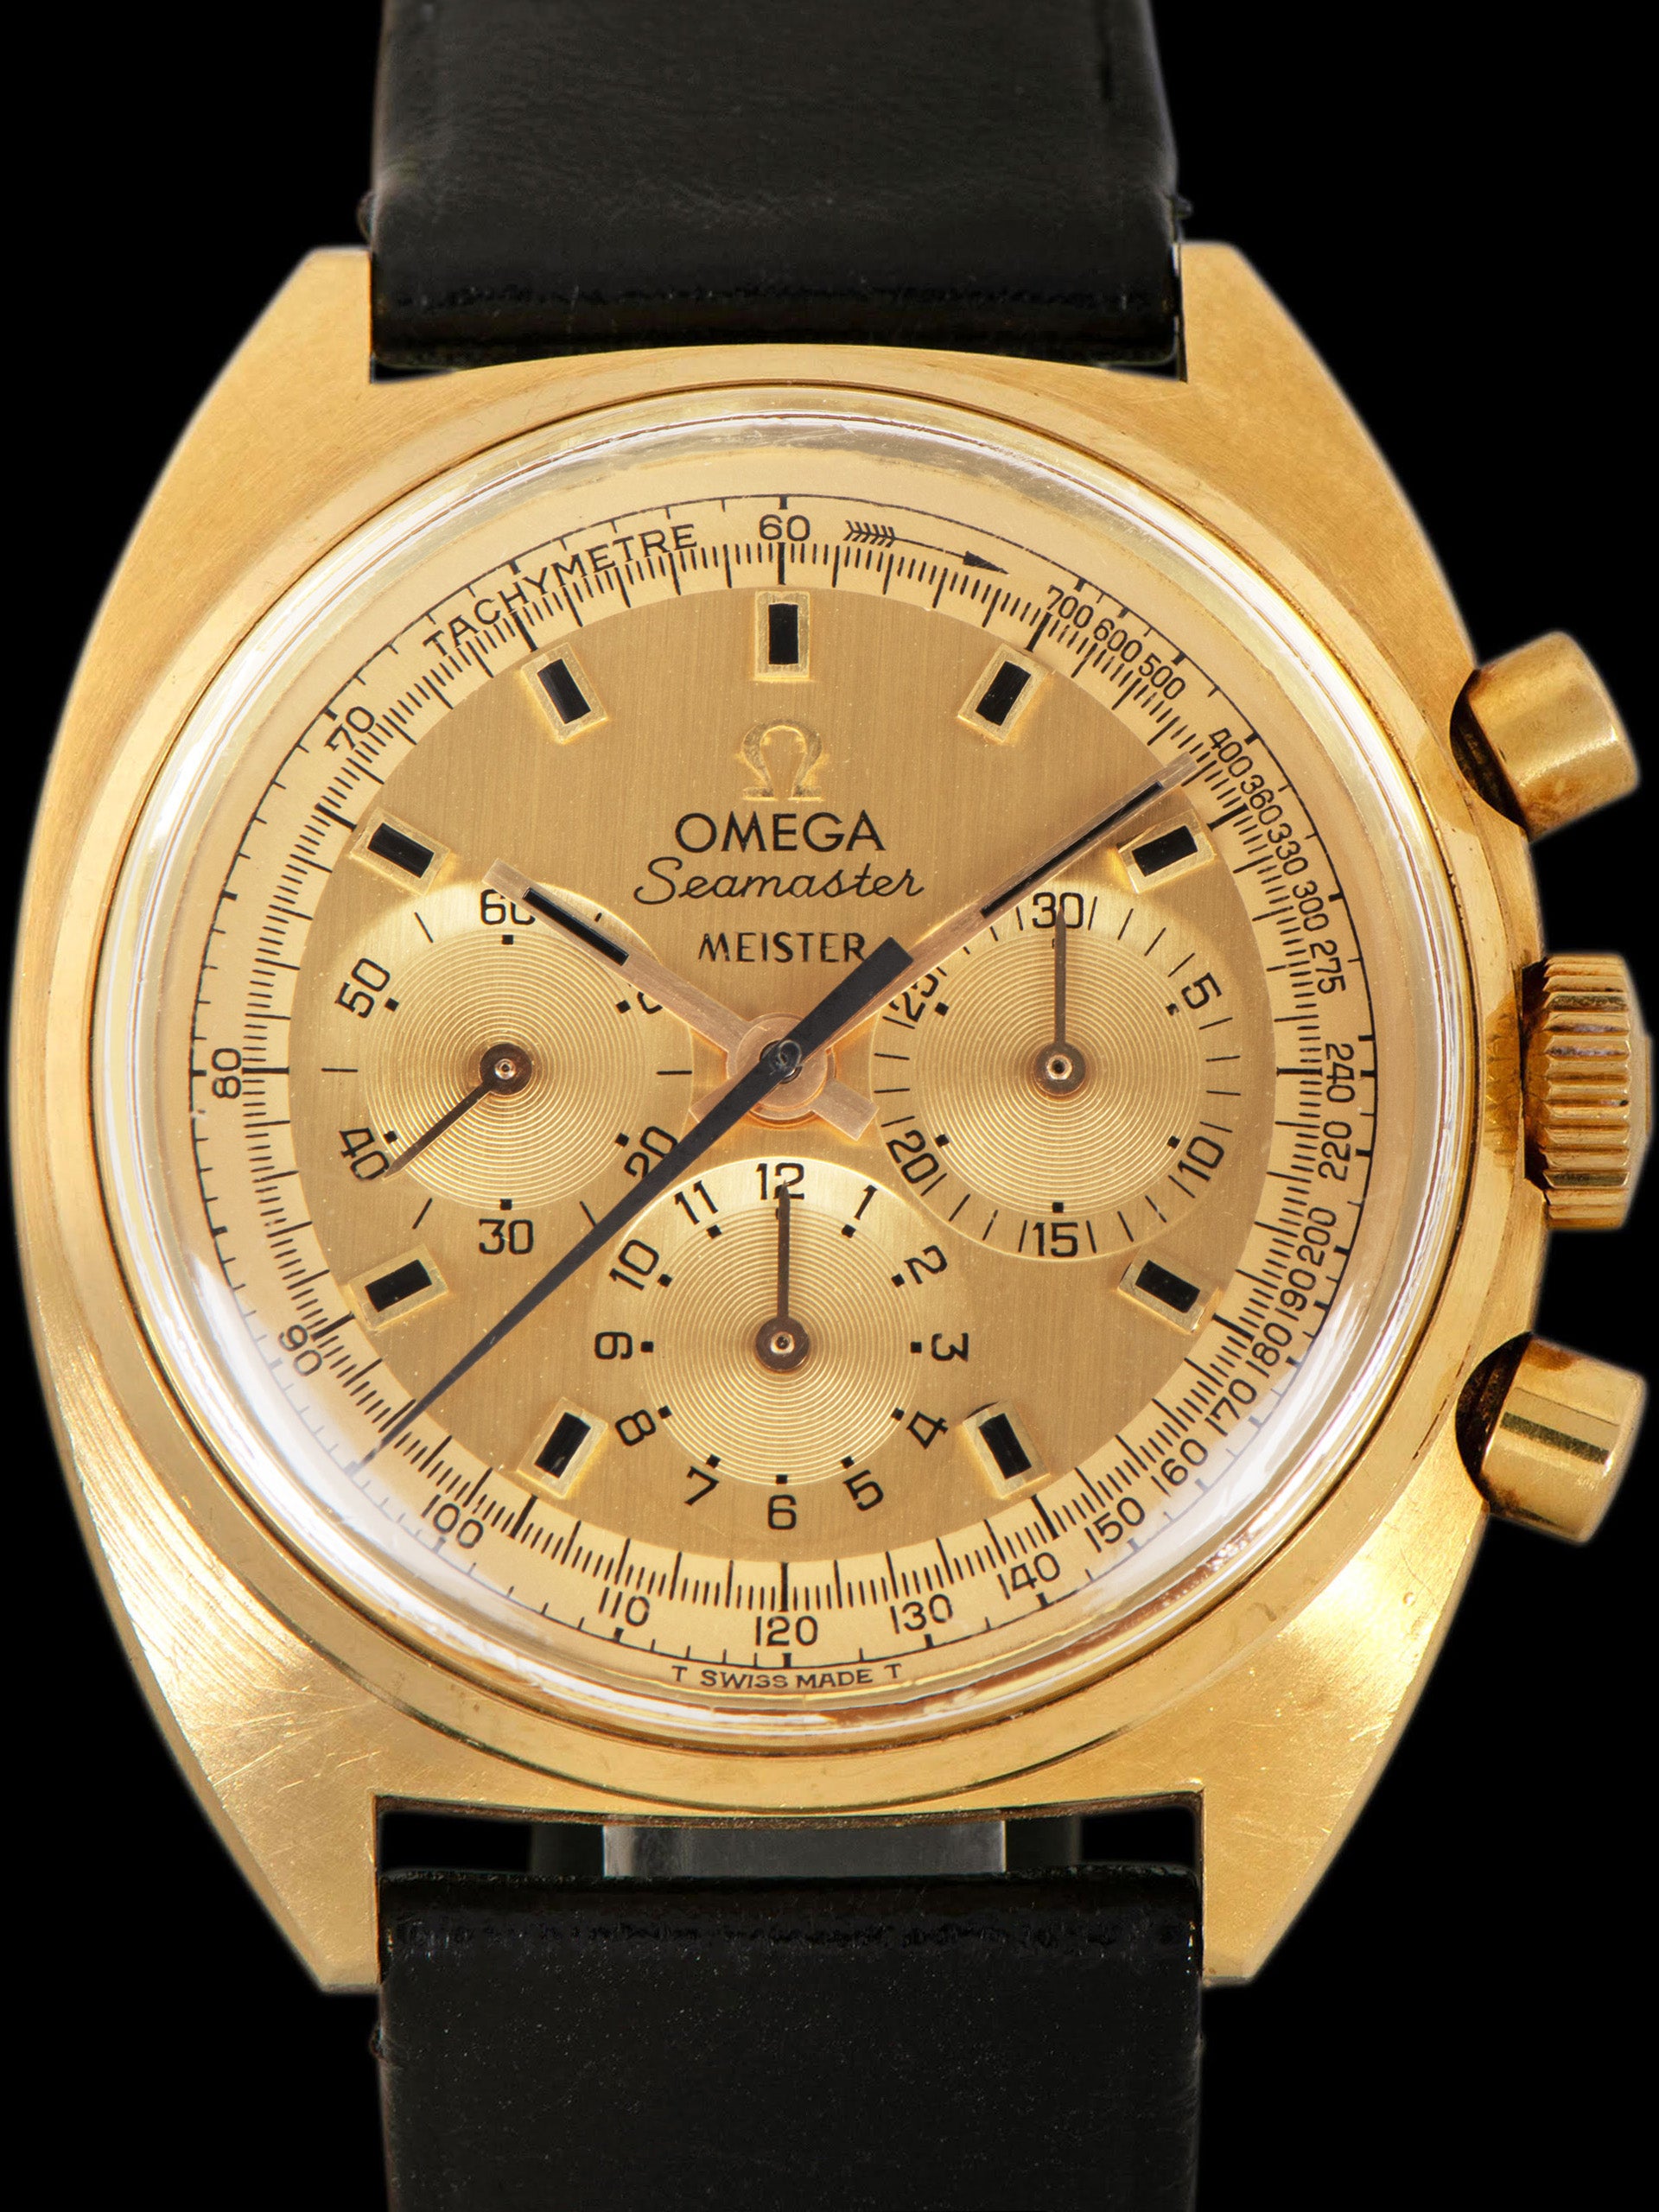 *Unpolished* 1968 Omega Seamaster Chronograph 18K YG (Ref. 145.006-68) "Cal. 321" Meister Co-Signed Dial